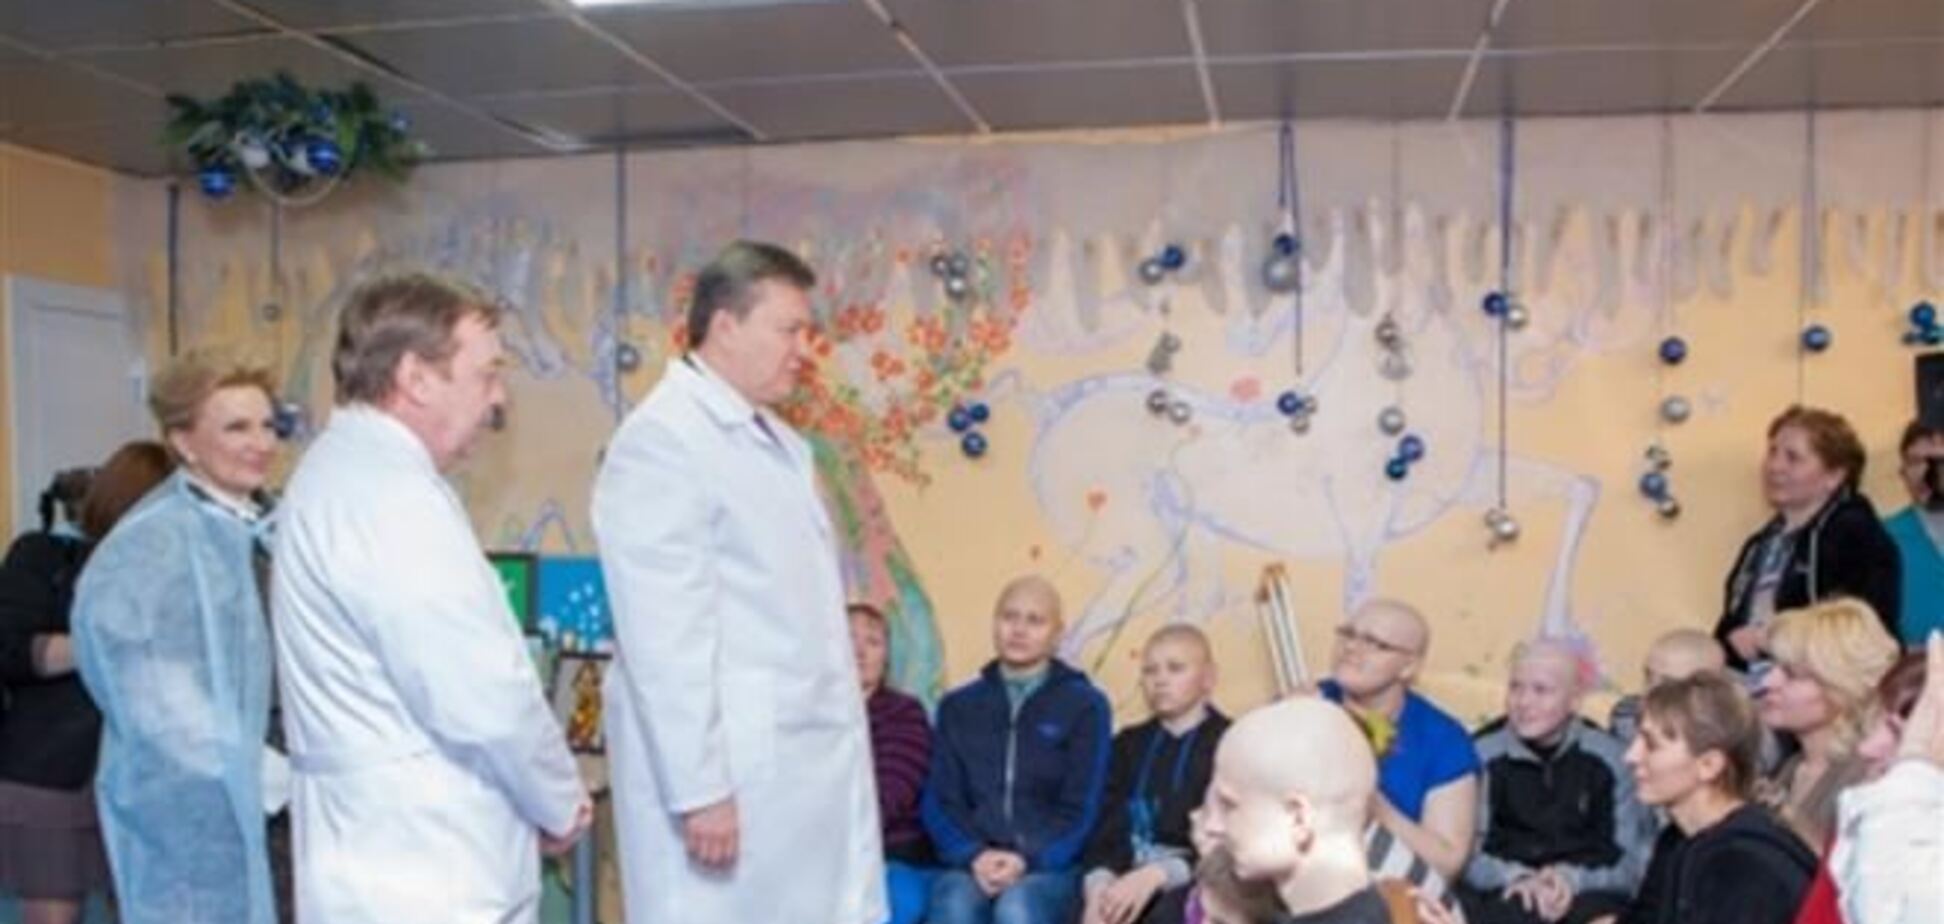 Лечебный режим института рака во время визита Президента не нарушался - МОЗ